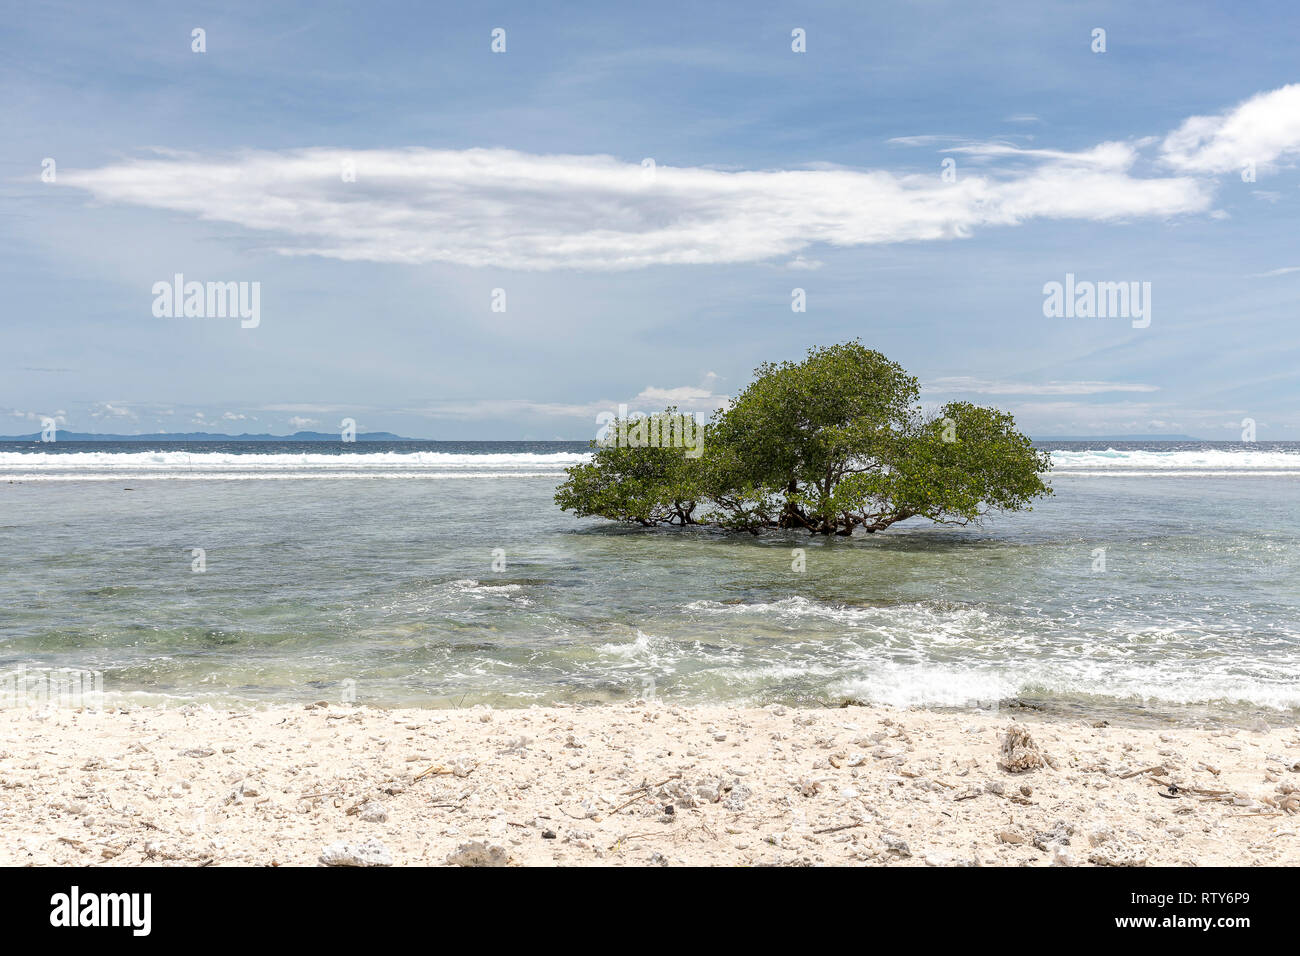 Tropical trees on the coast of Gili Trawangan in Indonesia. Stock Photo